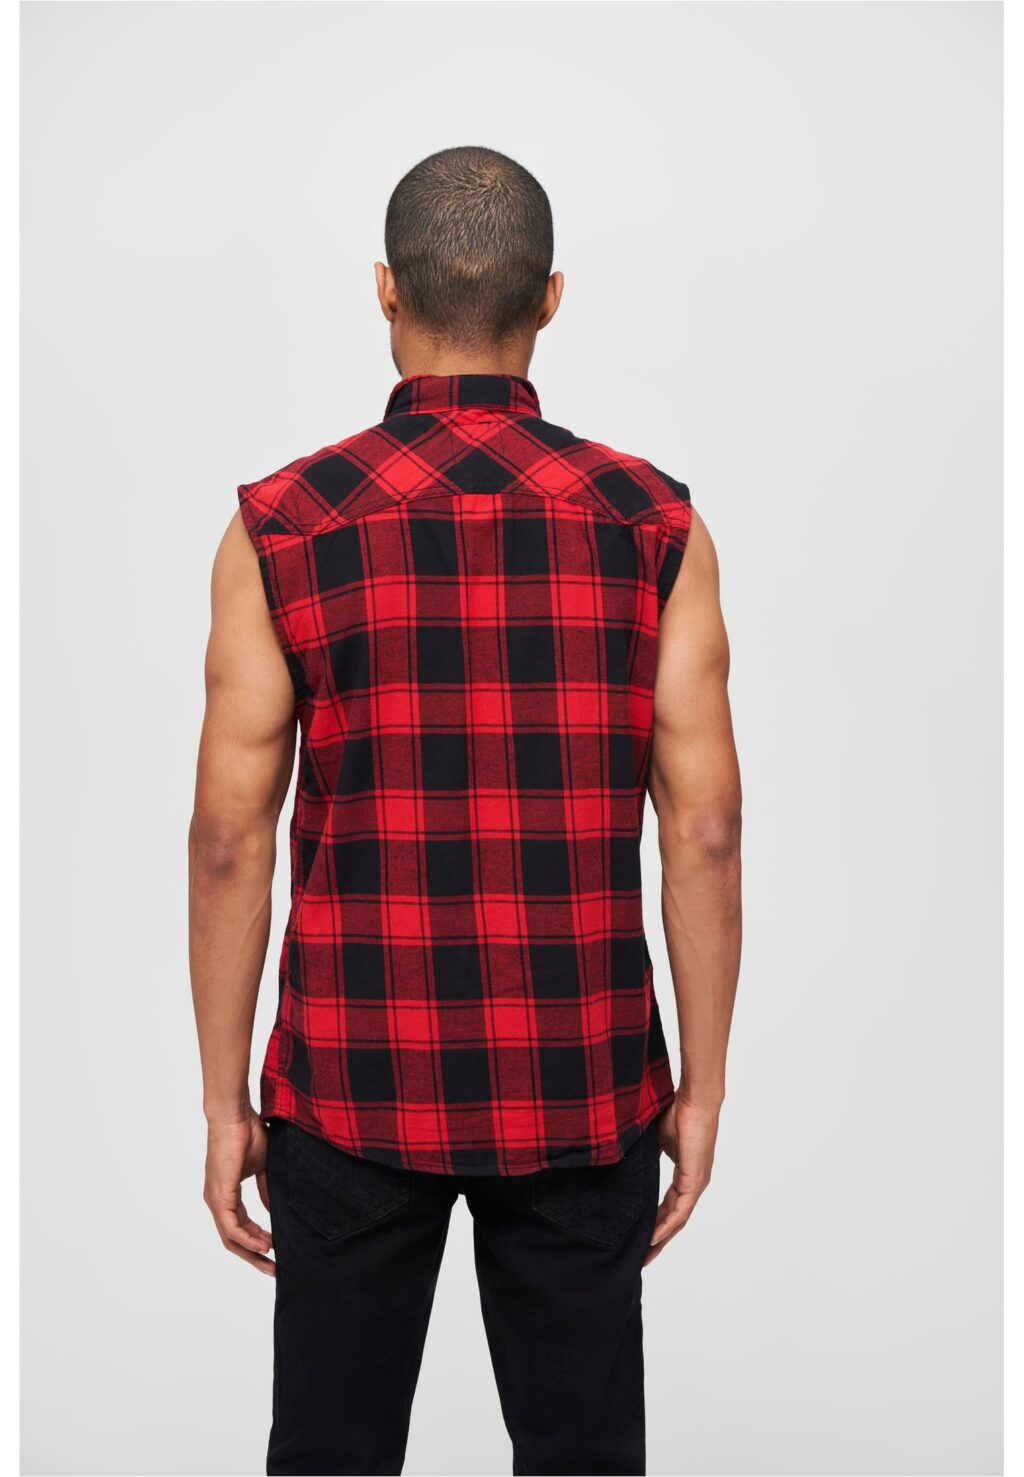 Brandit Checkshirt Sleeveless red/black BD4031